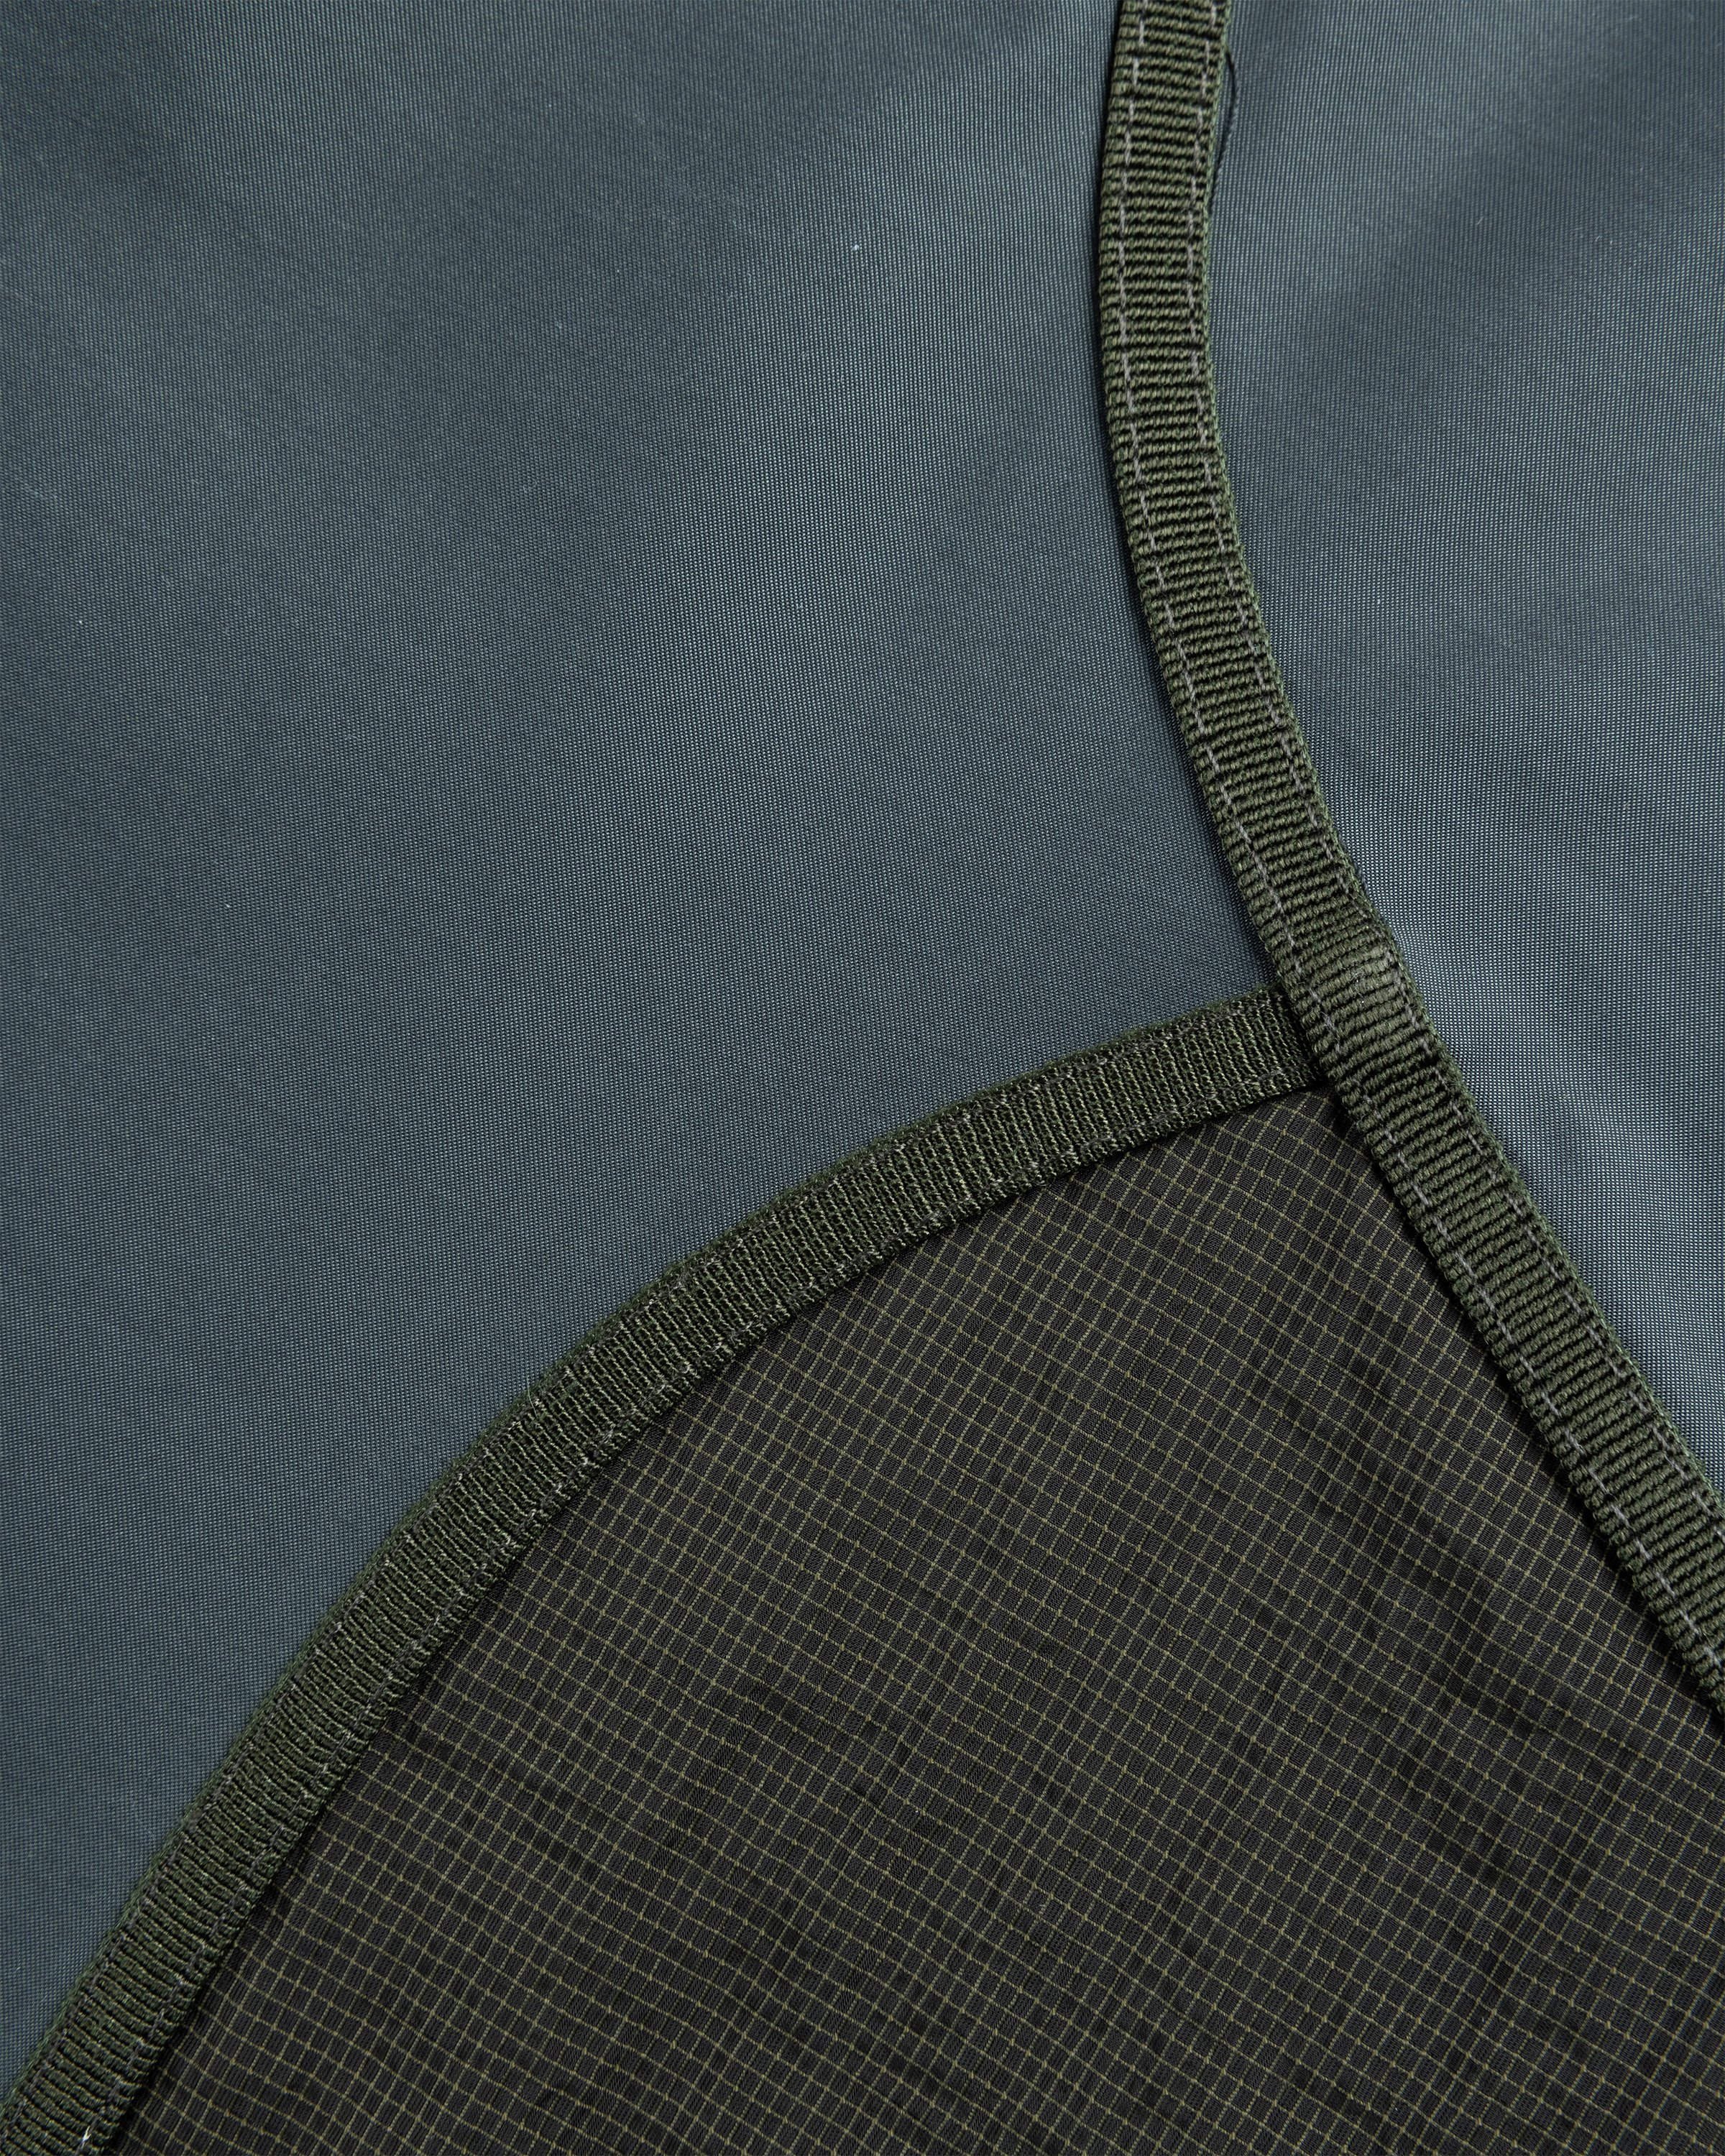 _J.L-A.L_ - Cavaty Pants Dark Grey - Clothing - Grey - Image 6